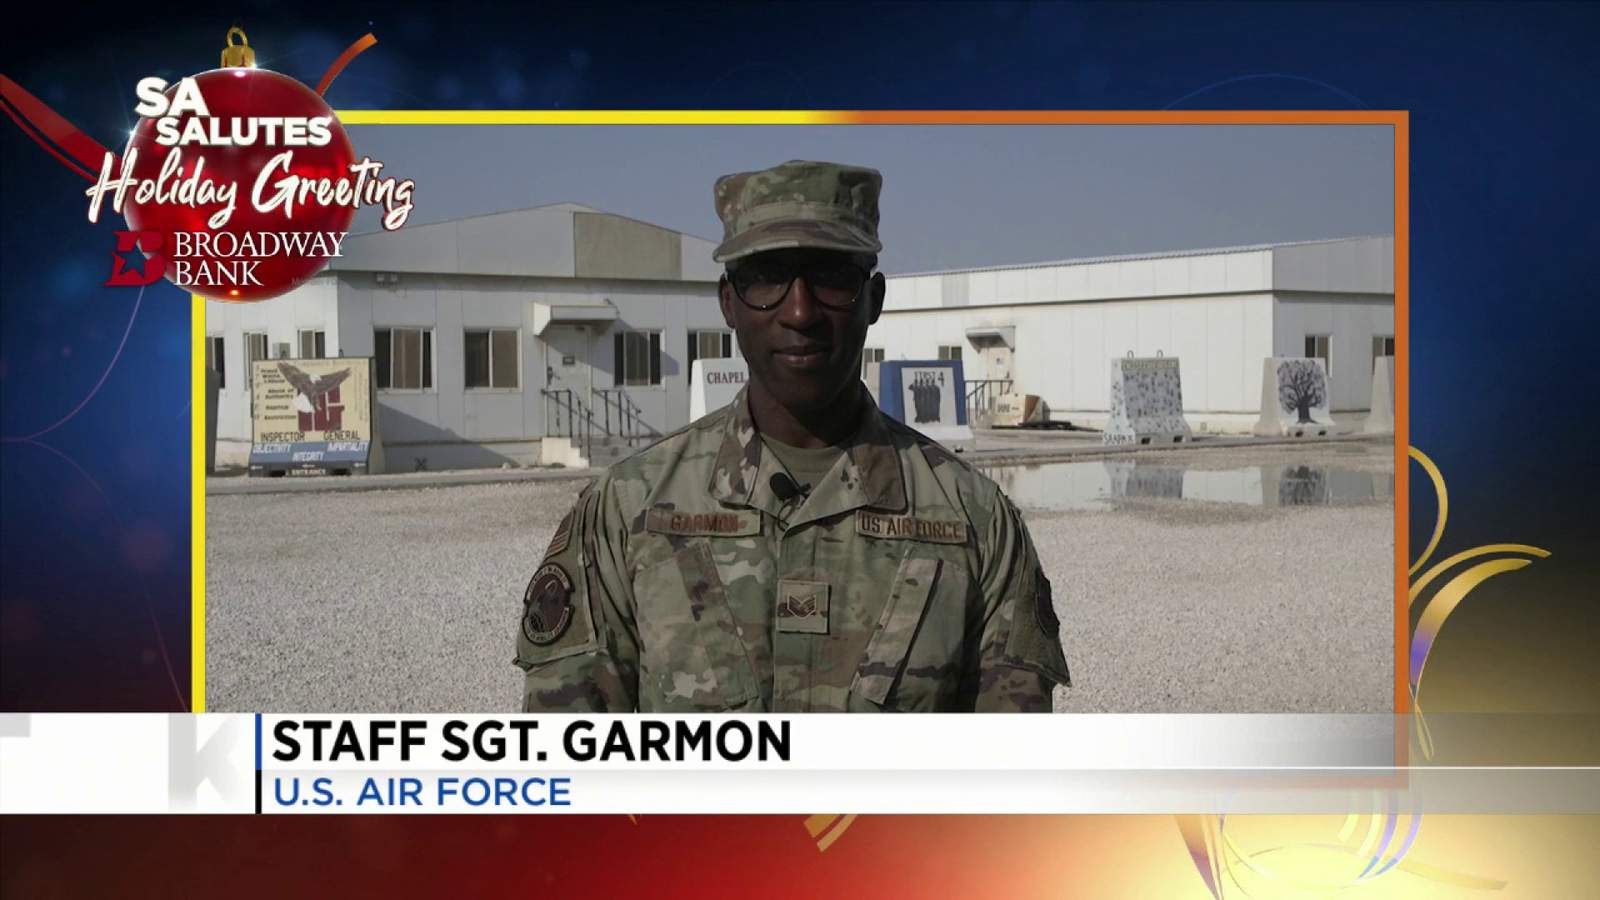 SA Salutes: Staff Sergeant Garmon